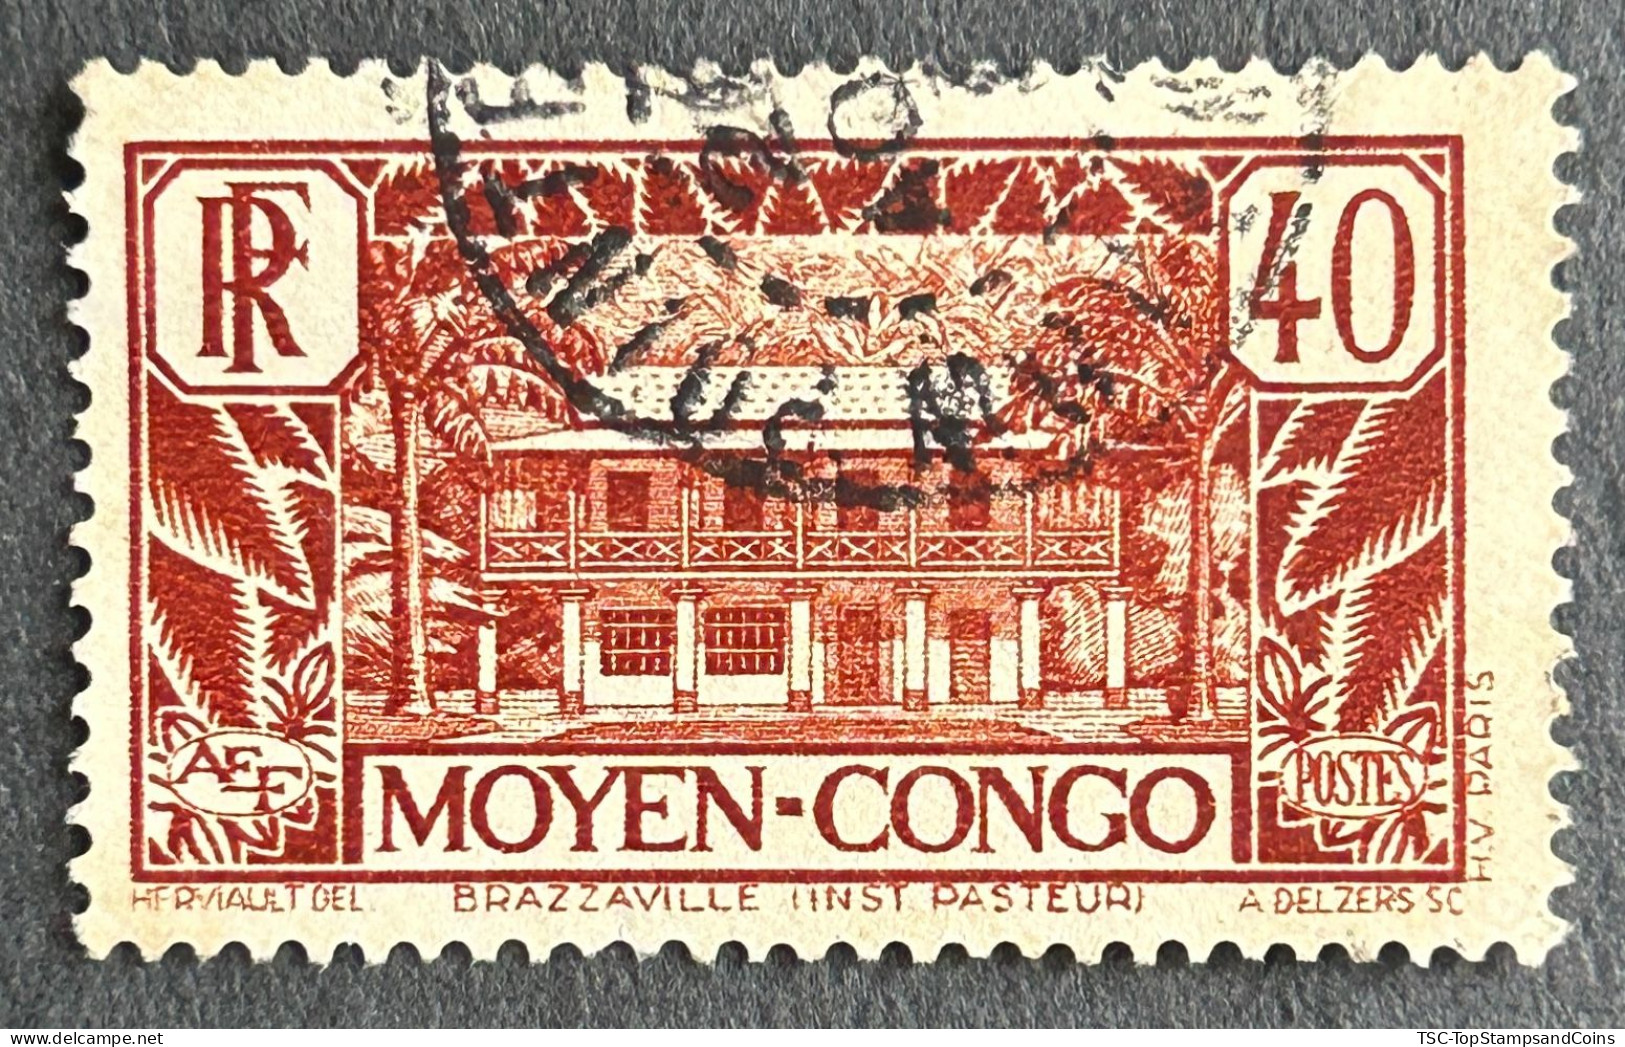 FRCG122U - Brazzaville - Pasteur Institute - 40 C Used Stamp - Middle Congo - 1933 - Usados